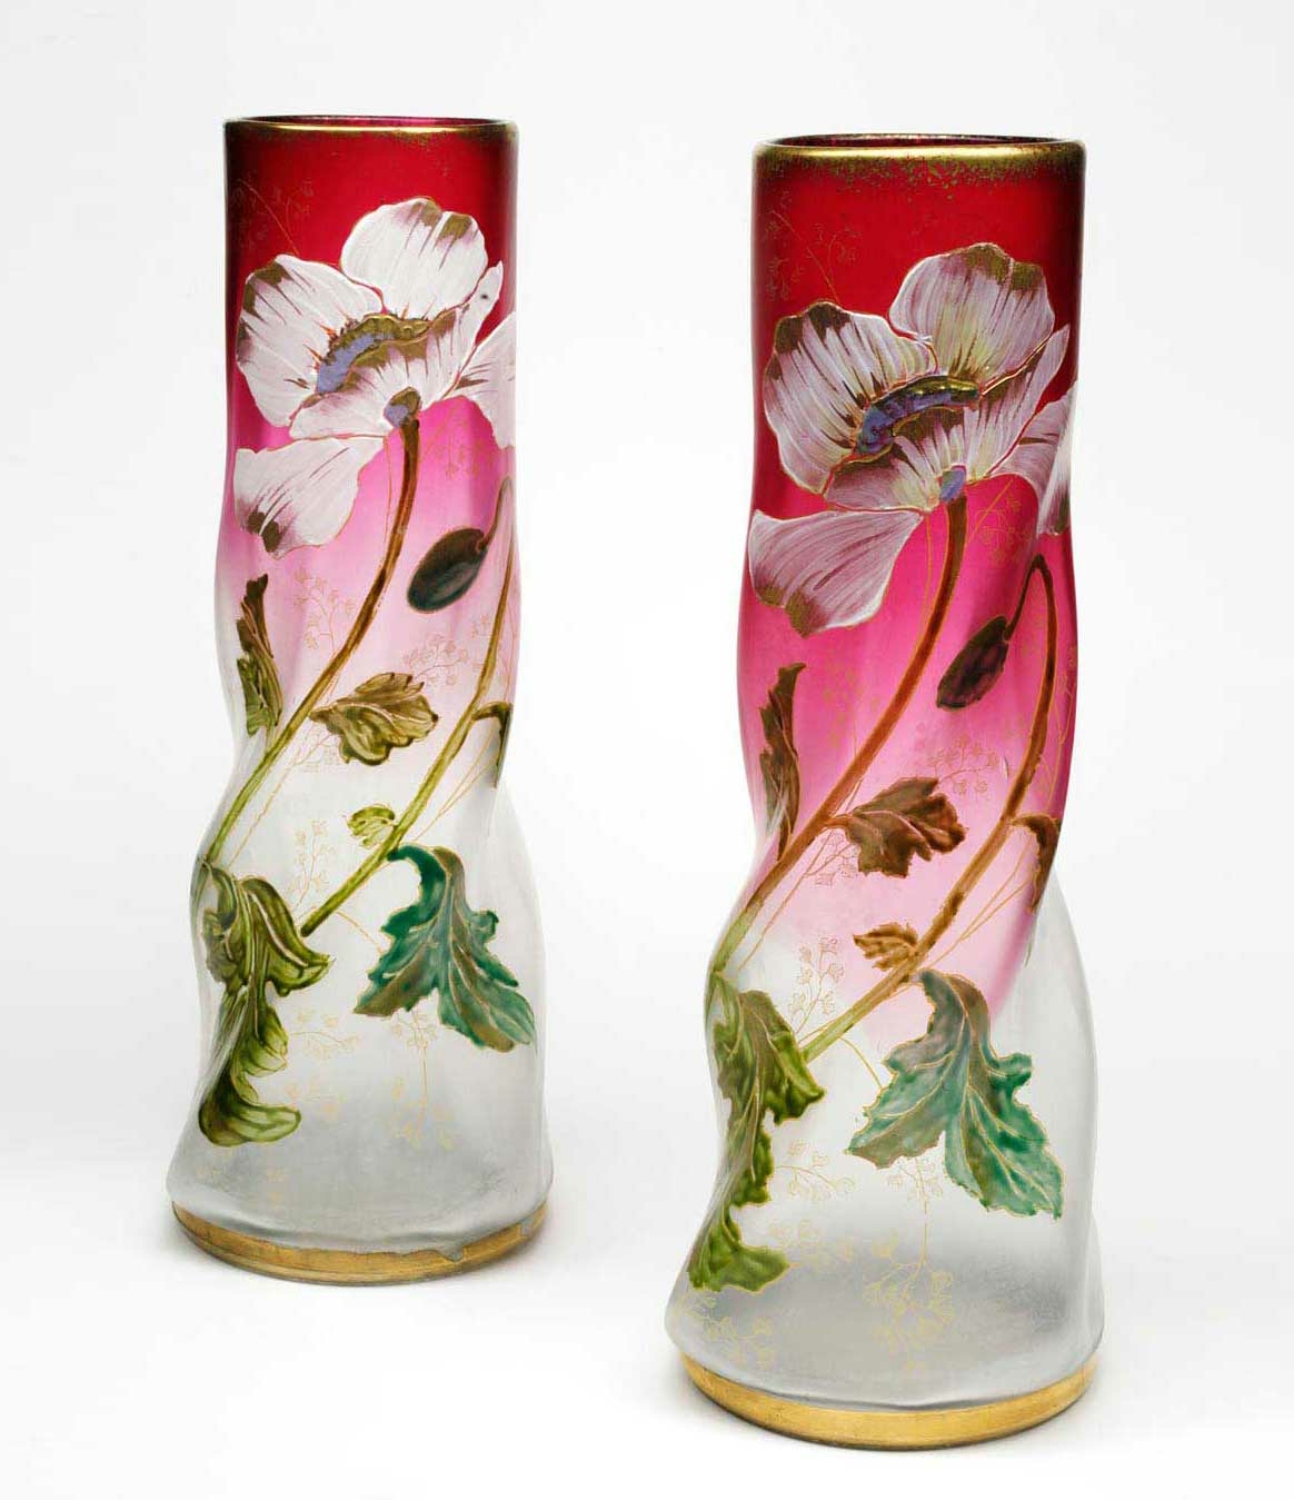 Sehr feines Paar große Legras Vasen - fleur de pavot blanches